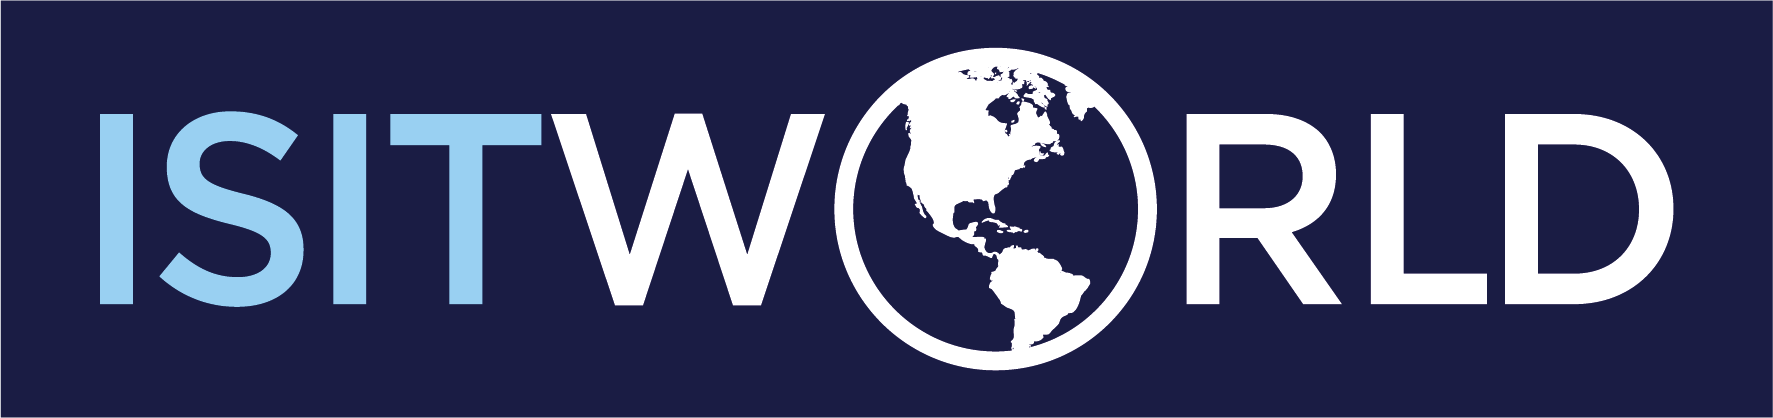 Isitworld_logo